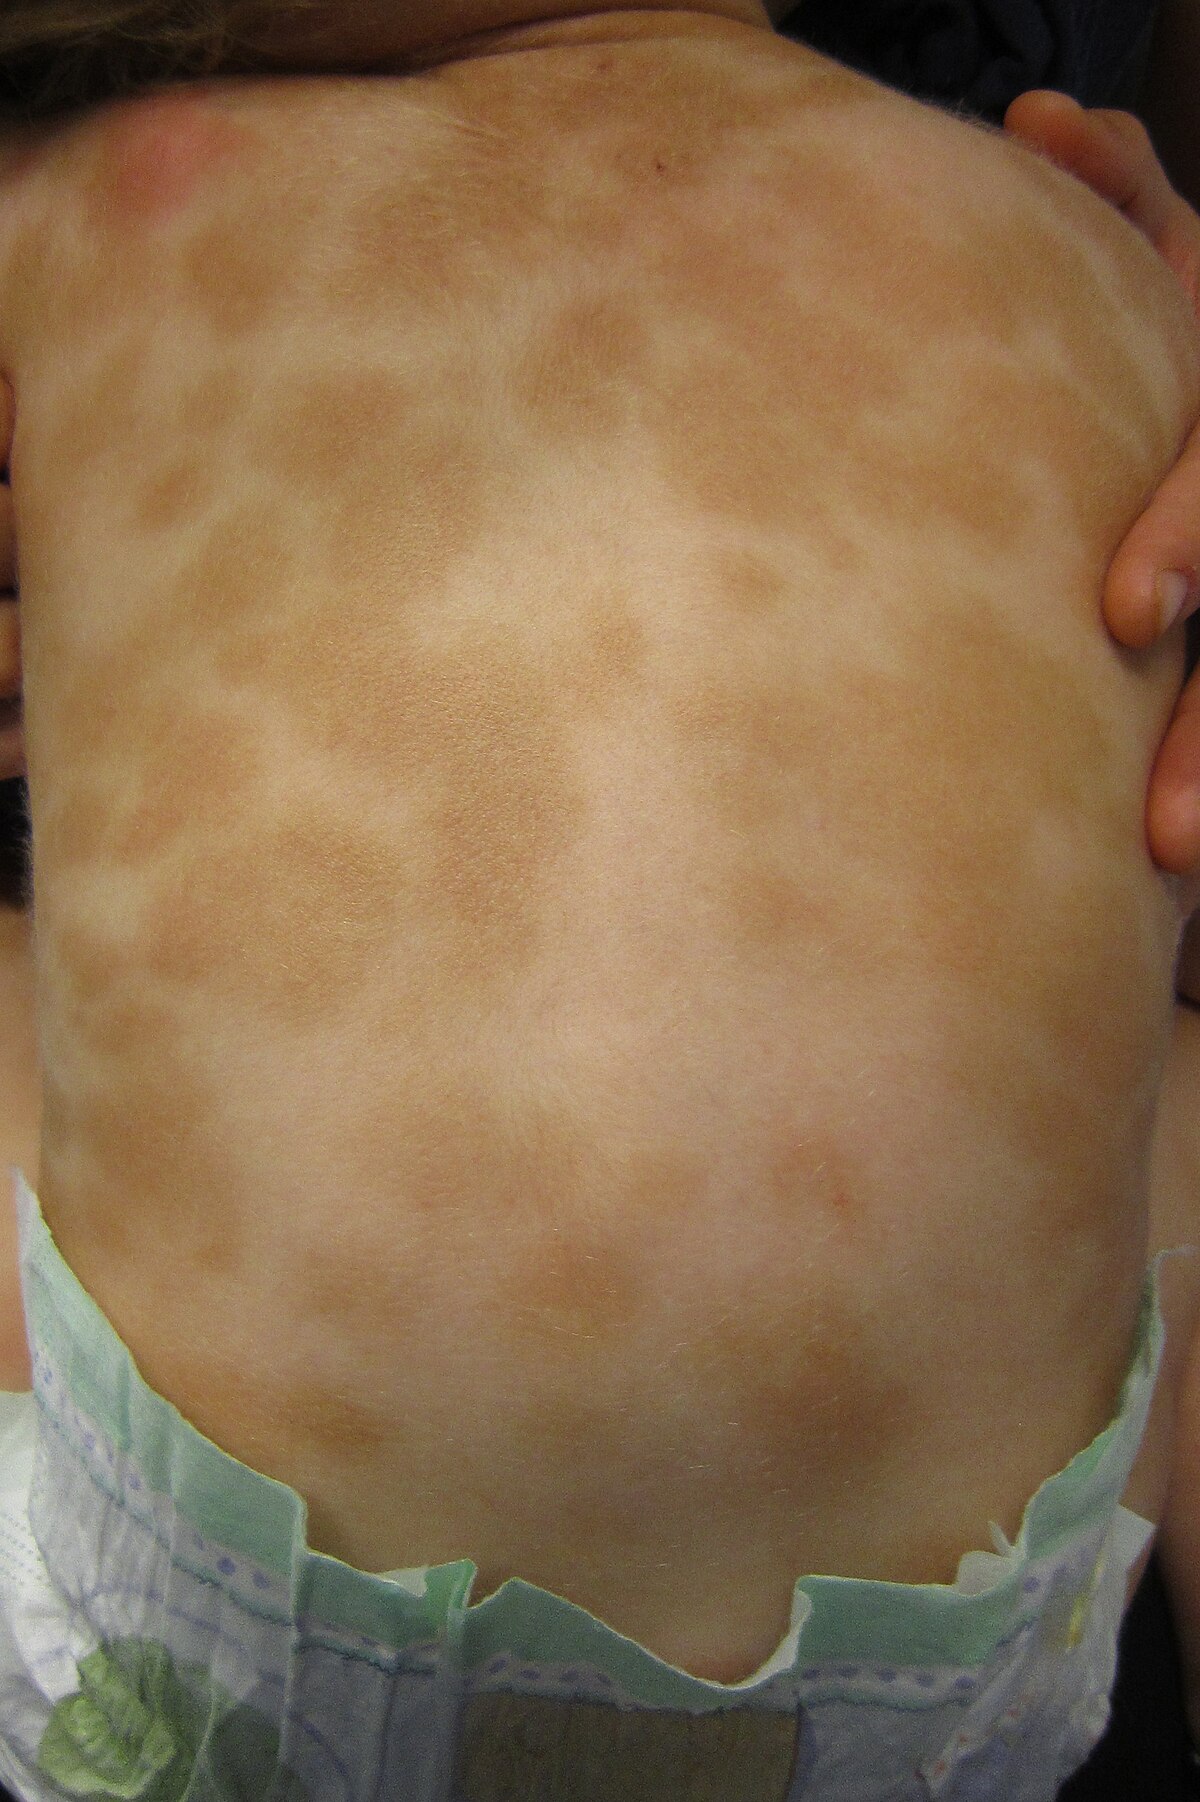 Dark spots on child's back